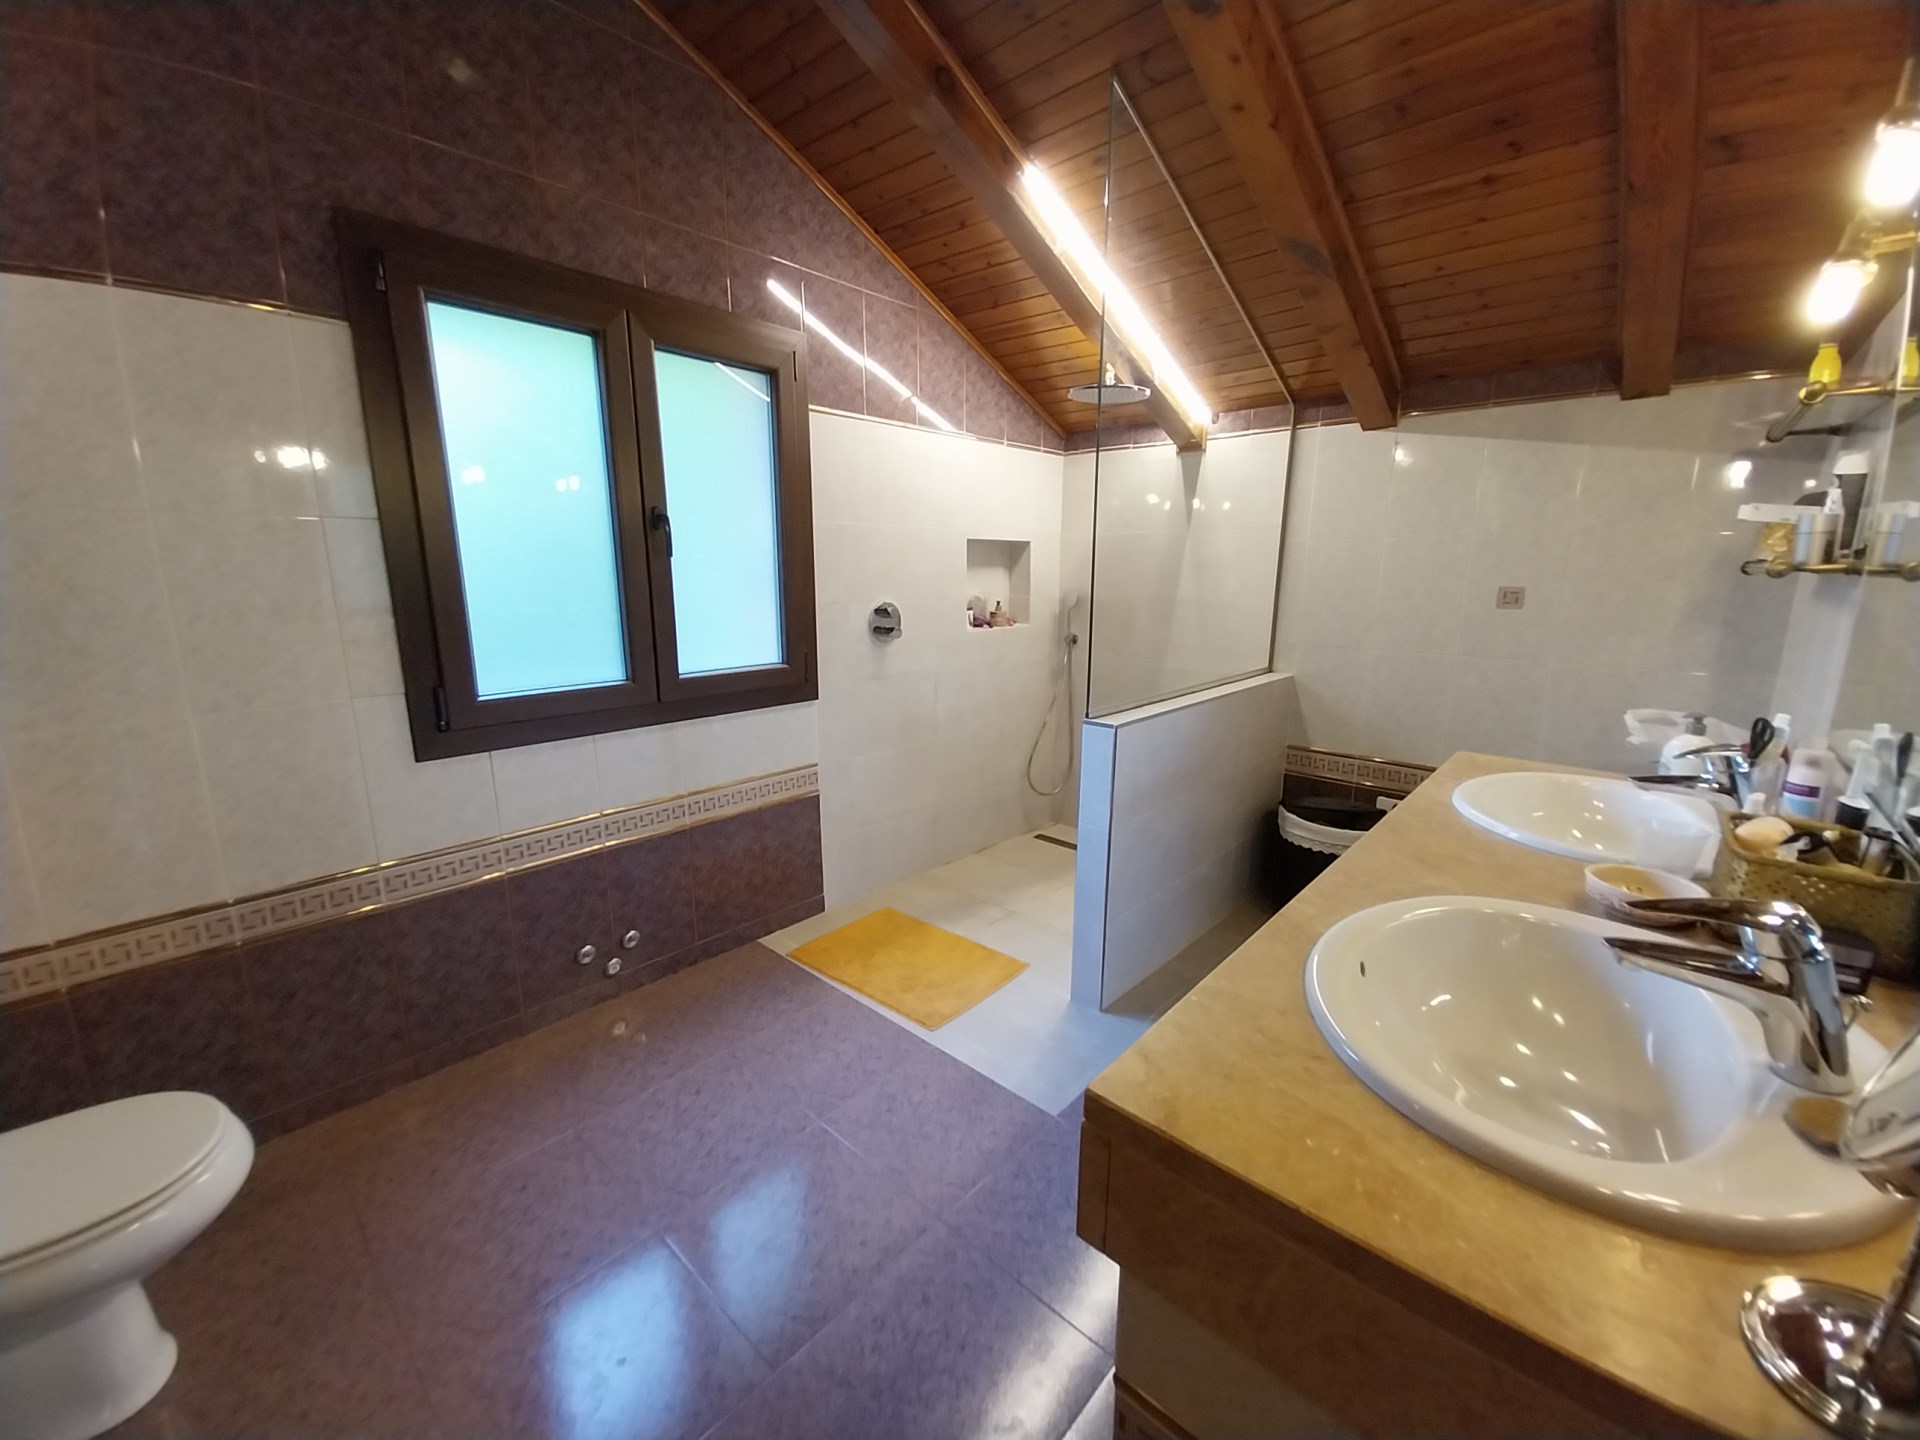 Xalet de lloguer a Escaldes Engordany, 4 habitacions, 420 metres